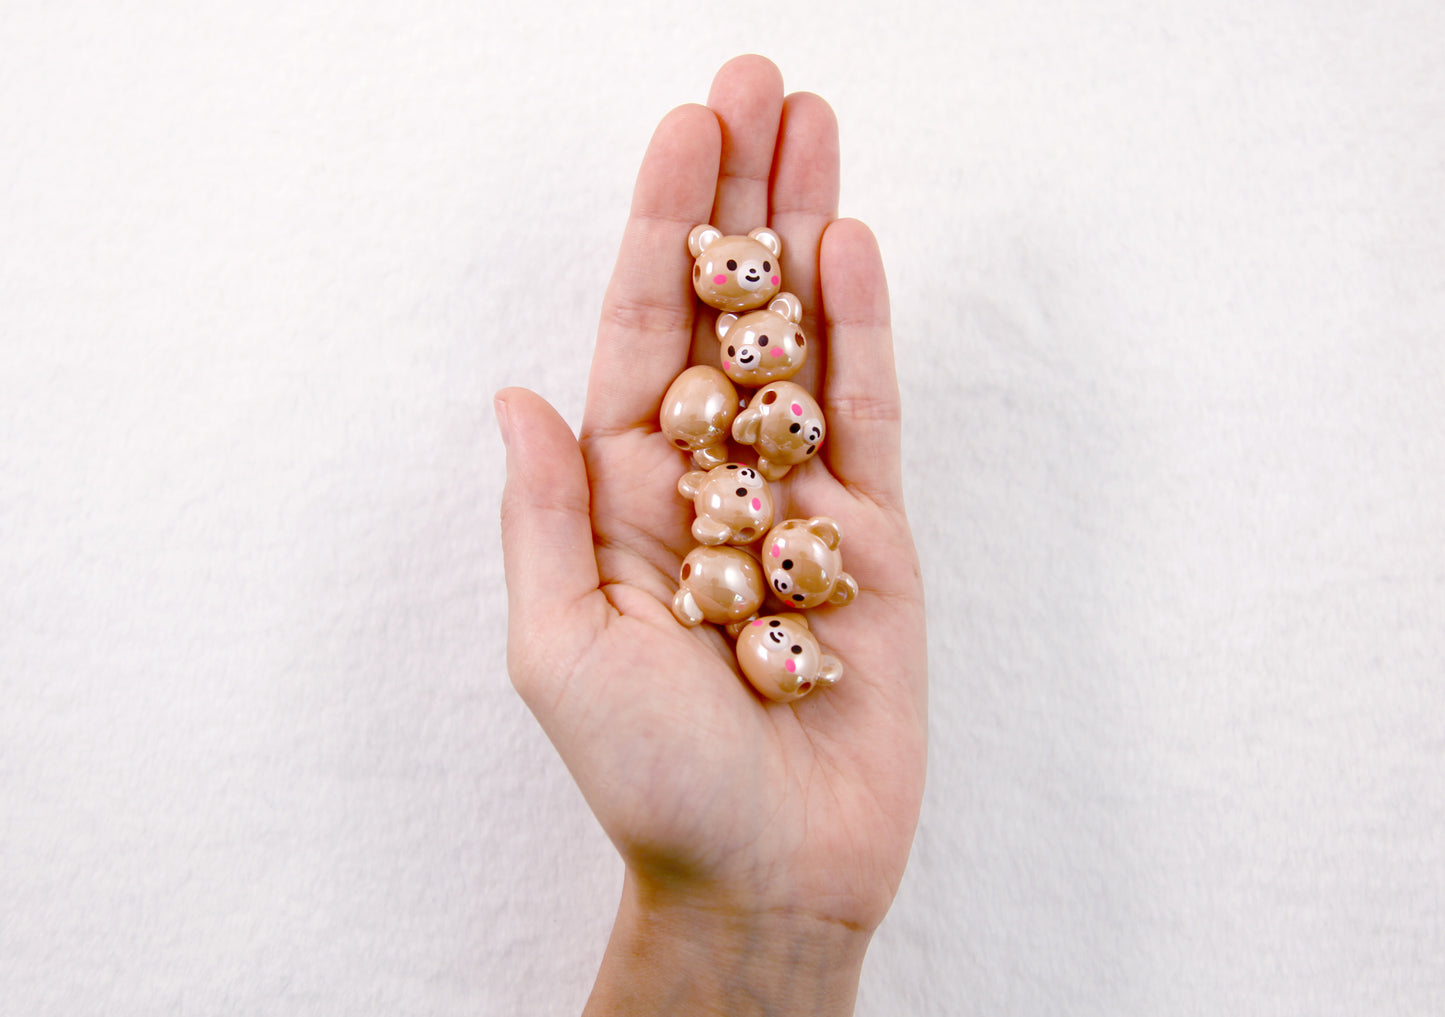 Cute Bear Beads - 20mm AB Brown Bear Resin or Acrylic Beads - 8 pc set